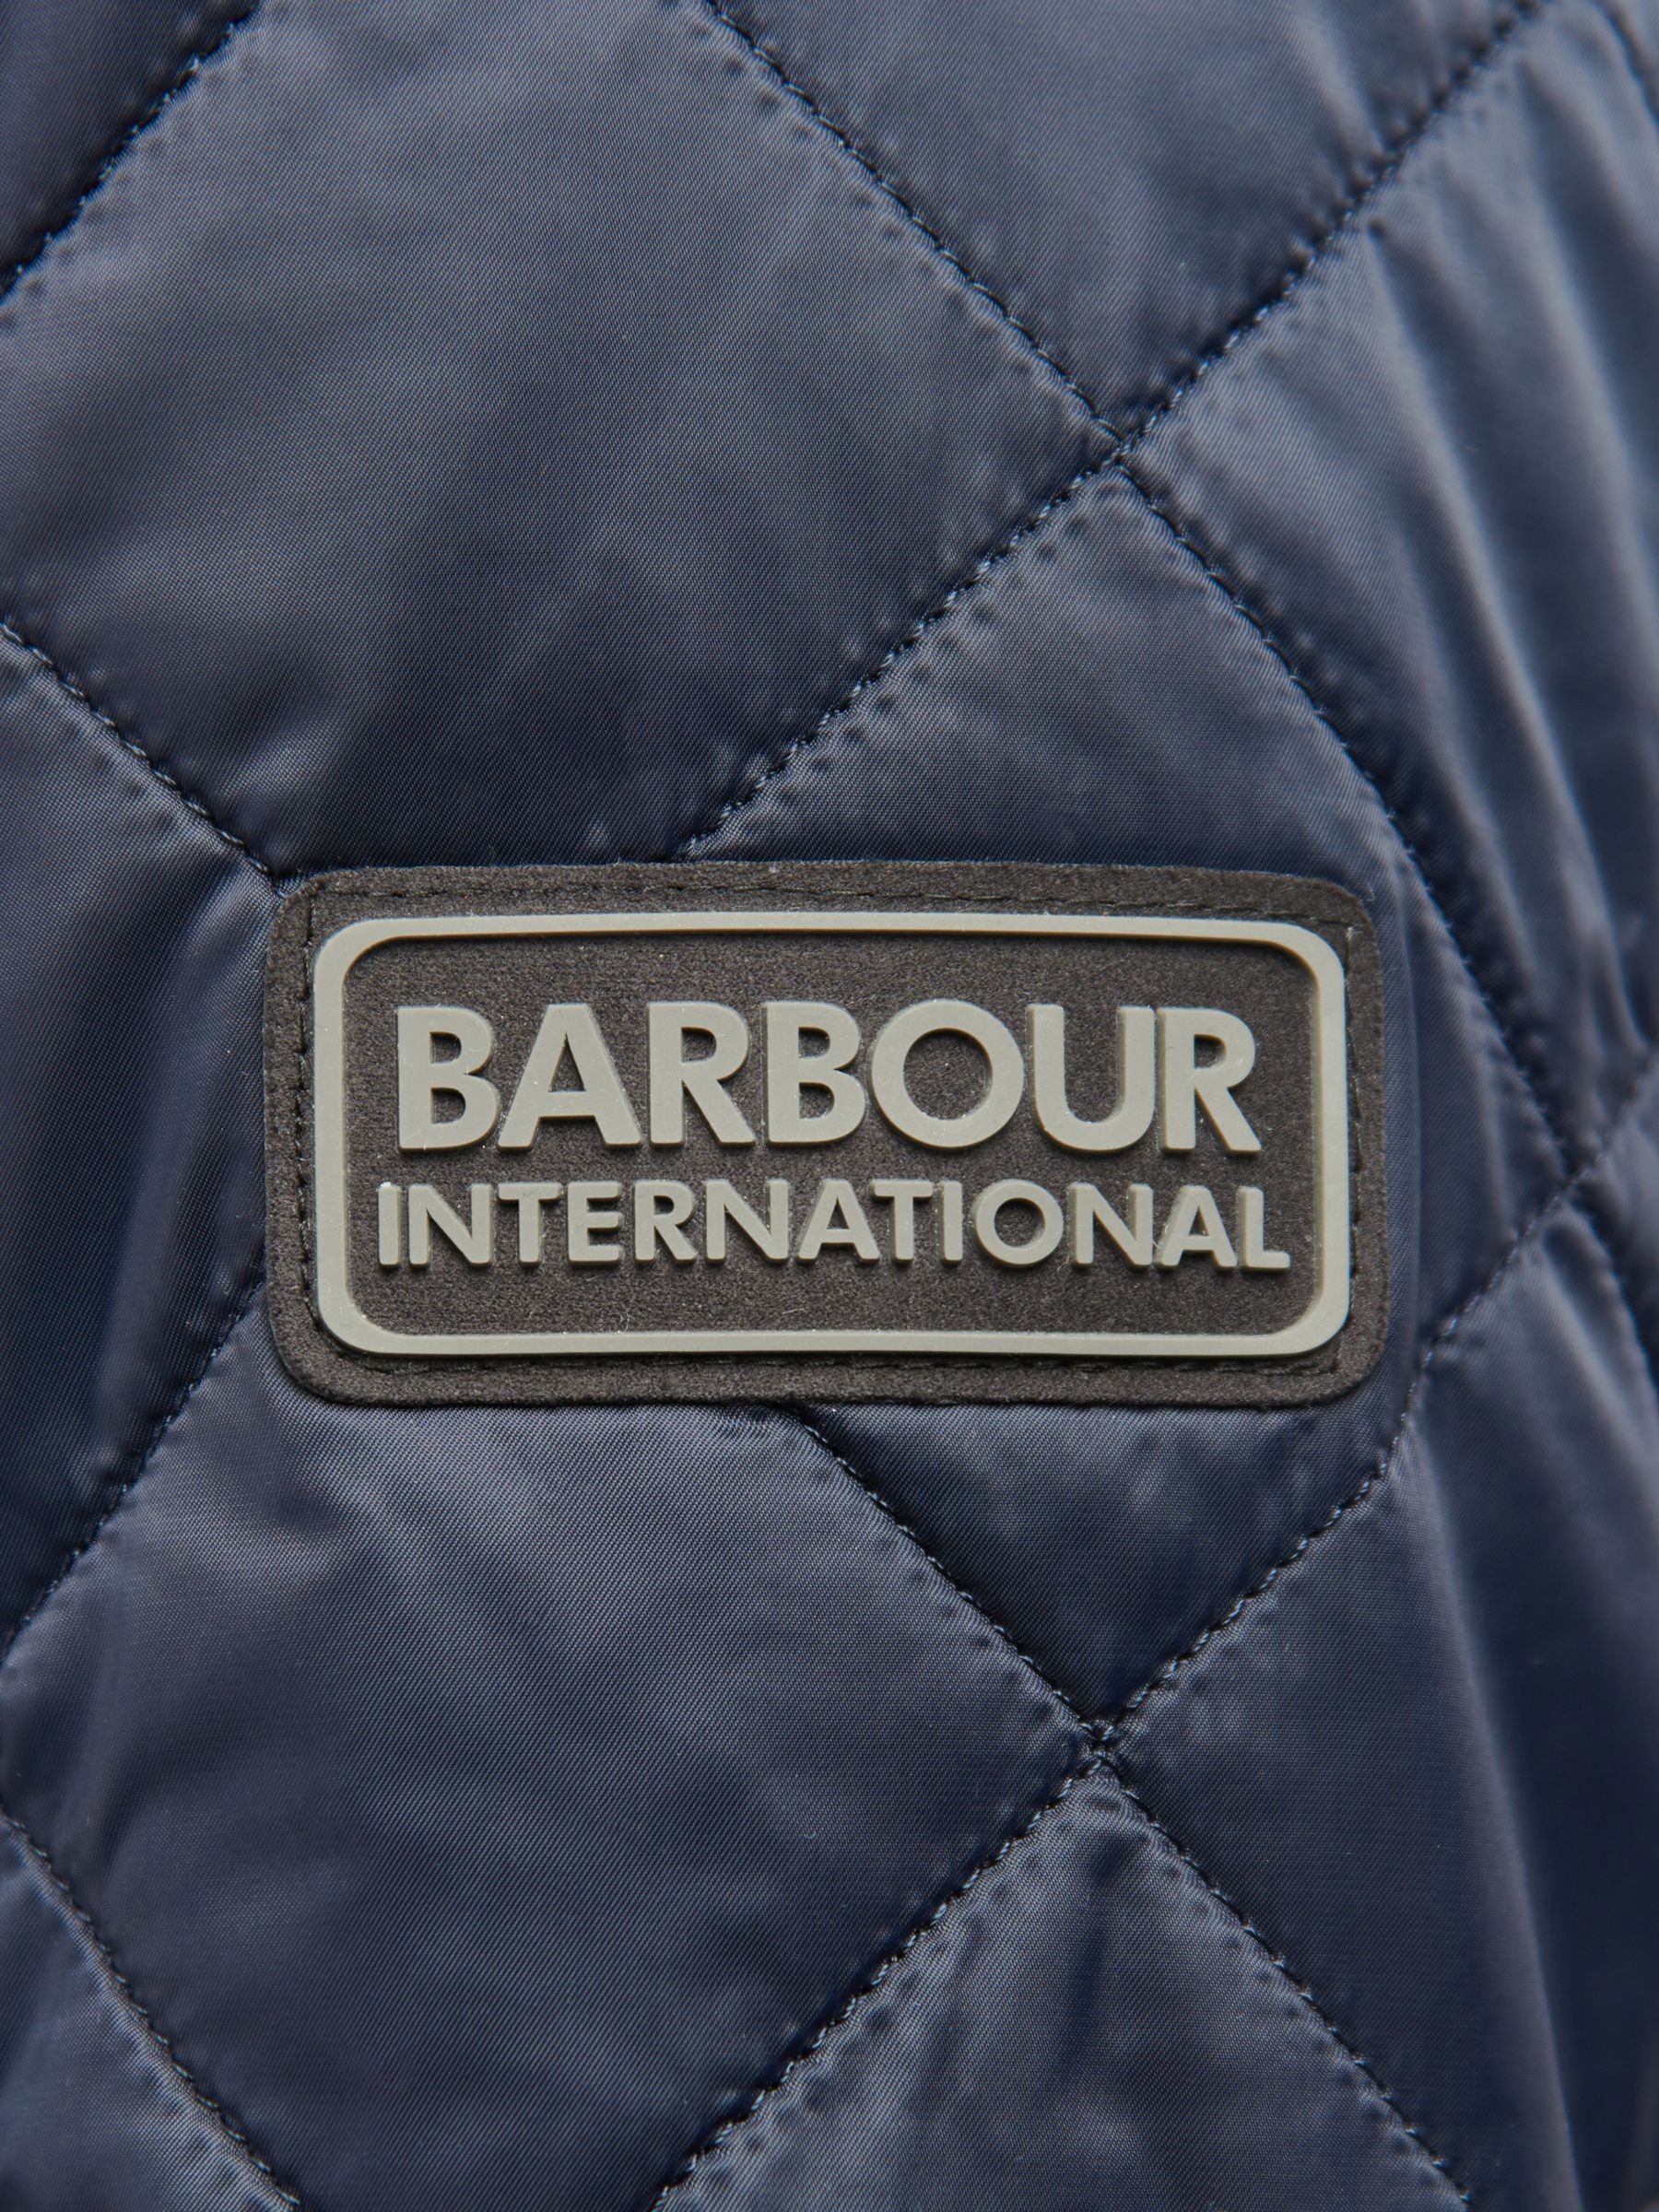 Barbour International Tourer Ariel Quilted Jacket, Navy, S